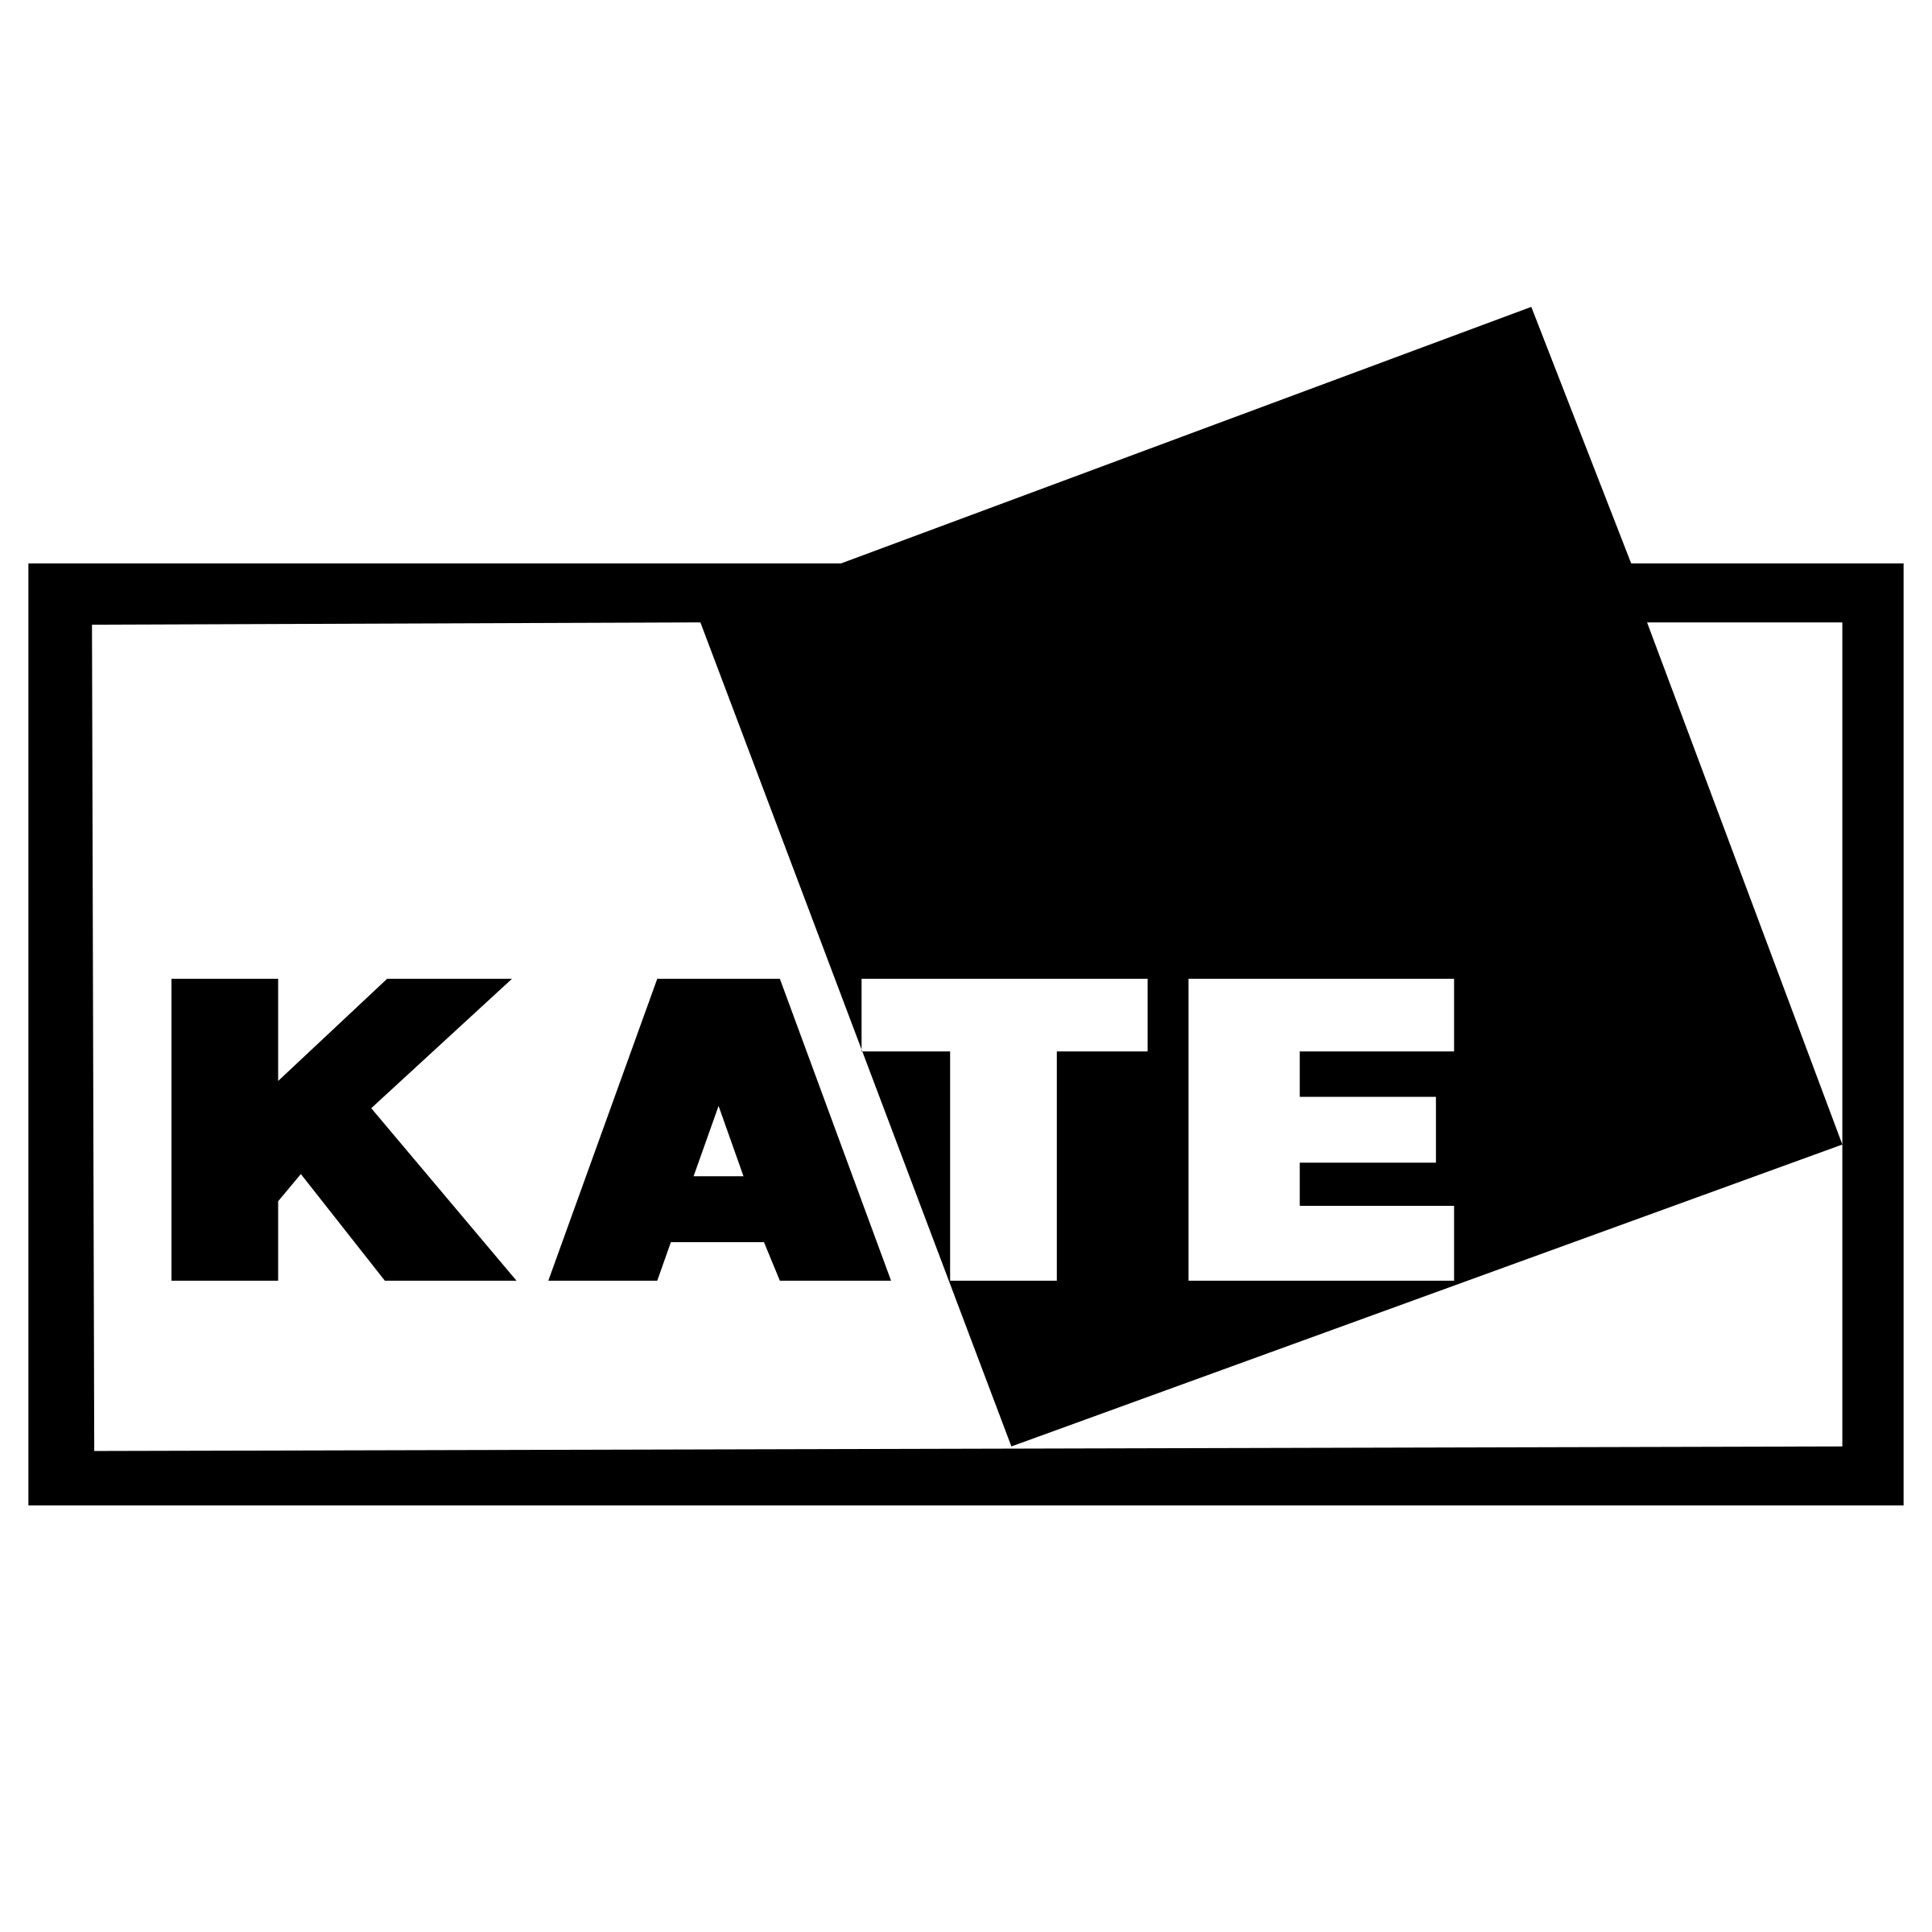 Kate Logo - Kate Logo PNG Transparent & SVG Vector - Freebie Supply